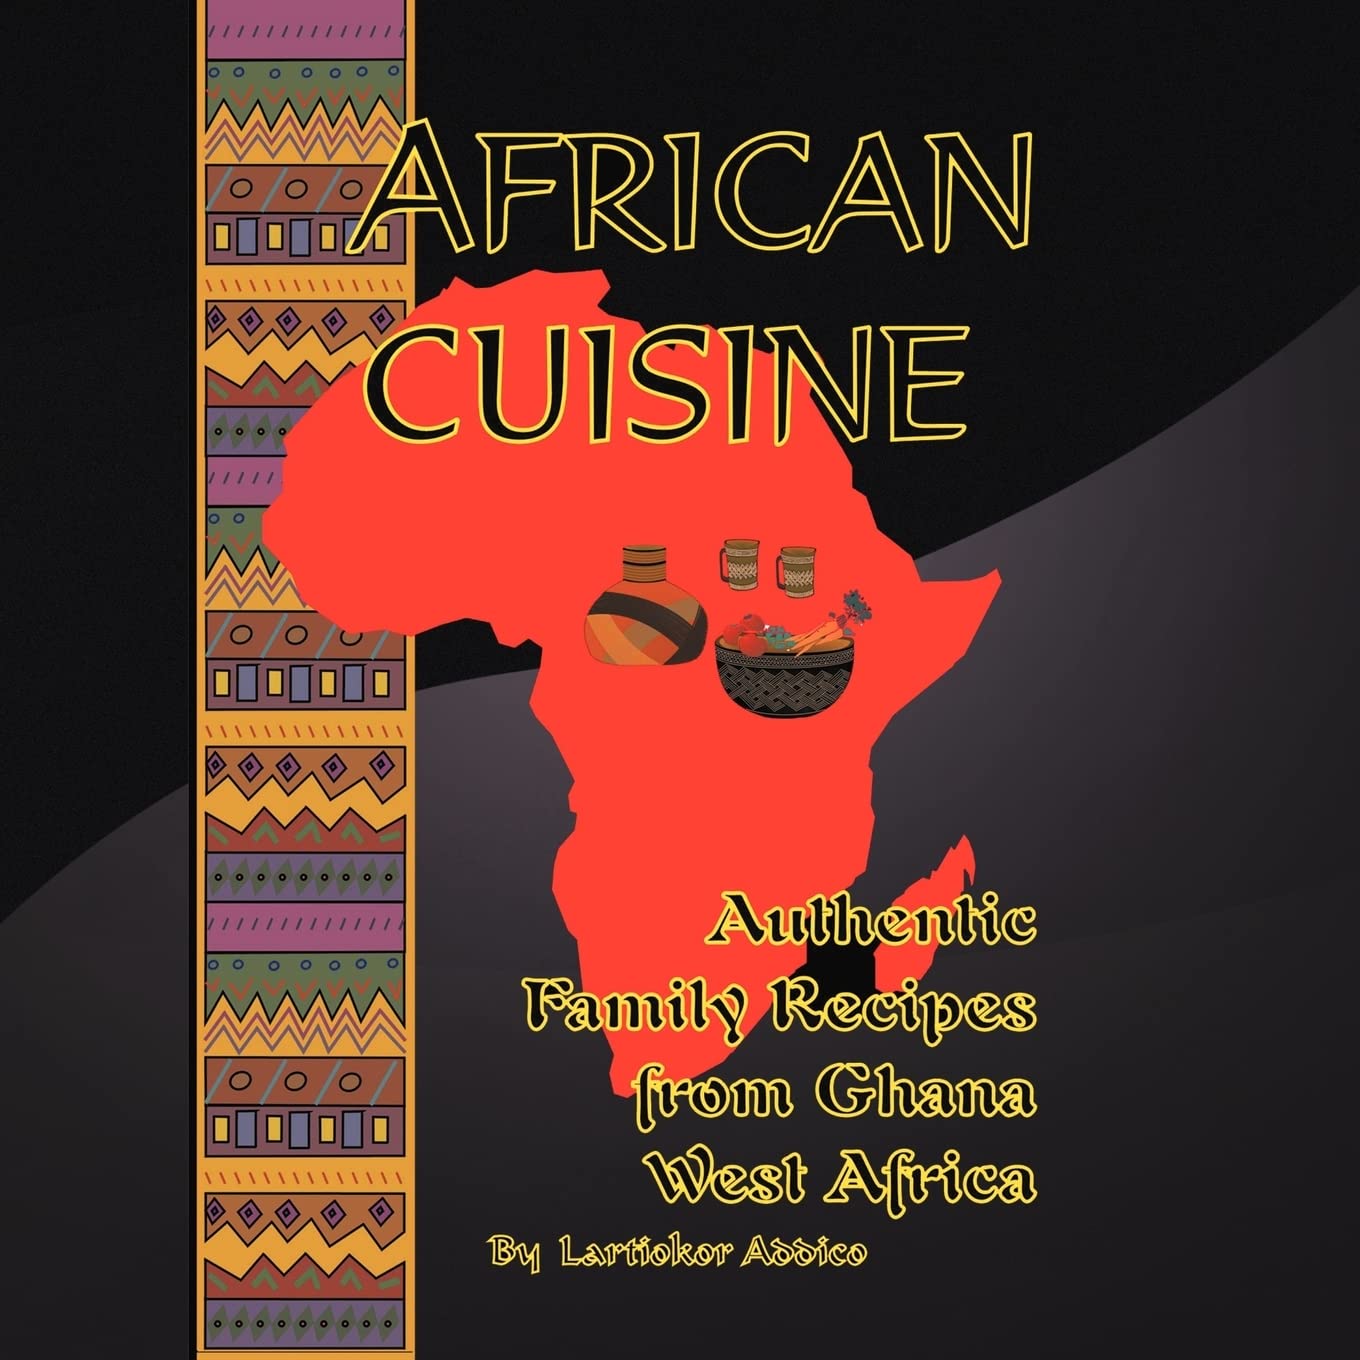 African Cuisine: Authentic Family Recipes from Ghana West Africa (Lartiokor Addico)